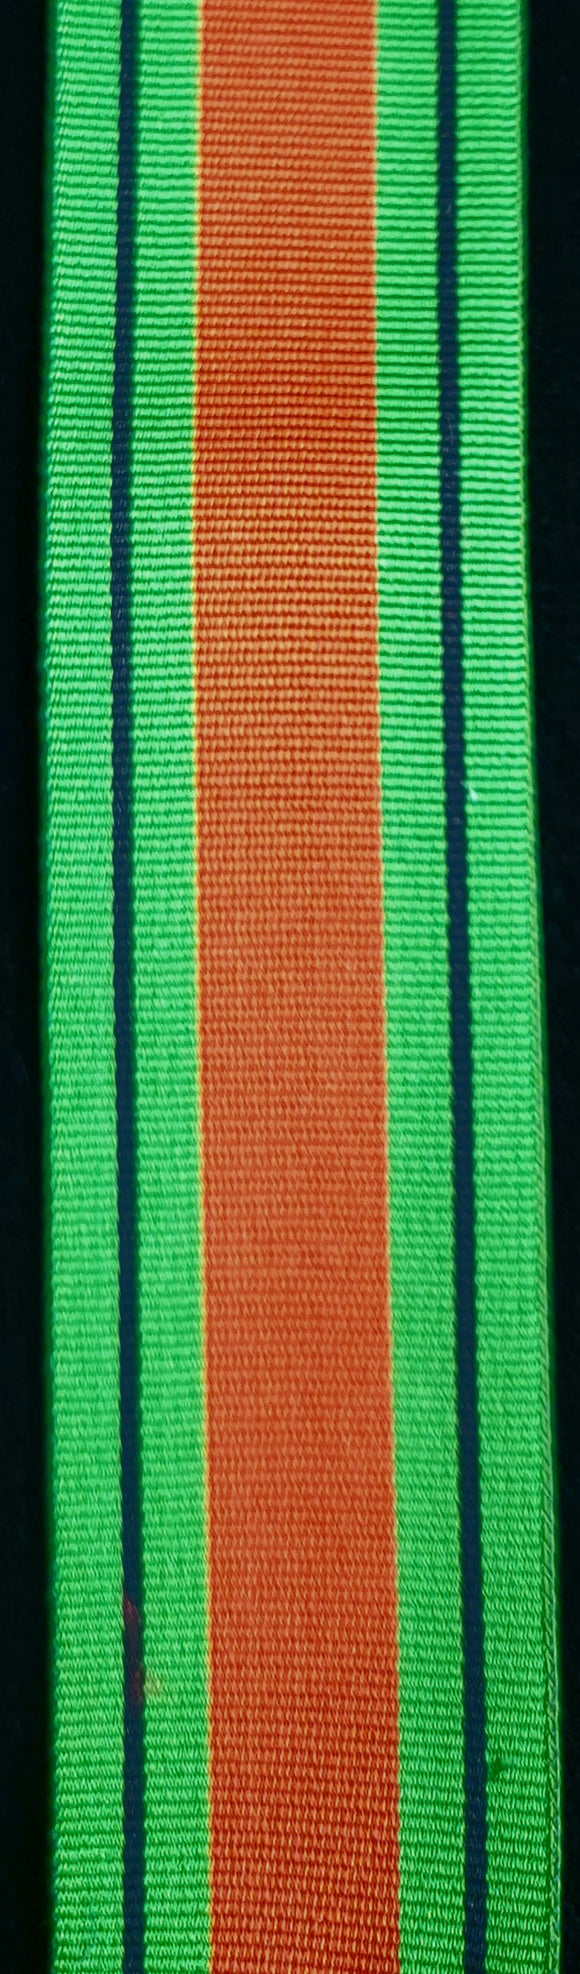 Ribbon, WW2 Defence Medal